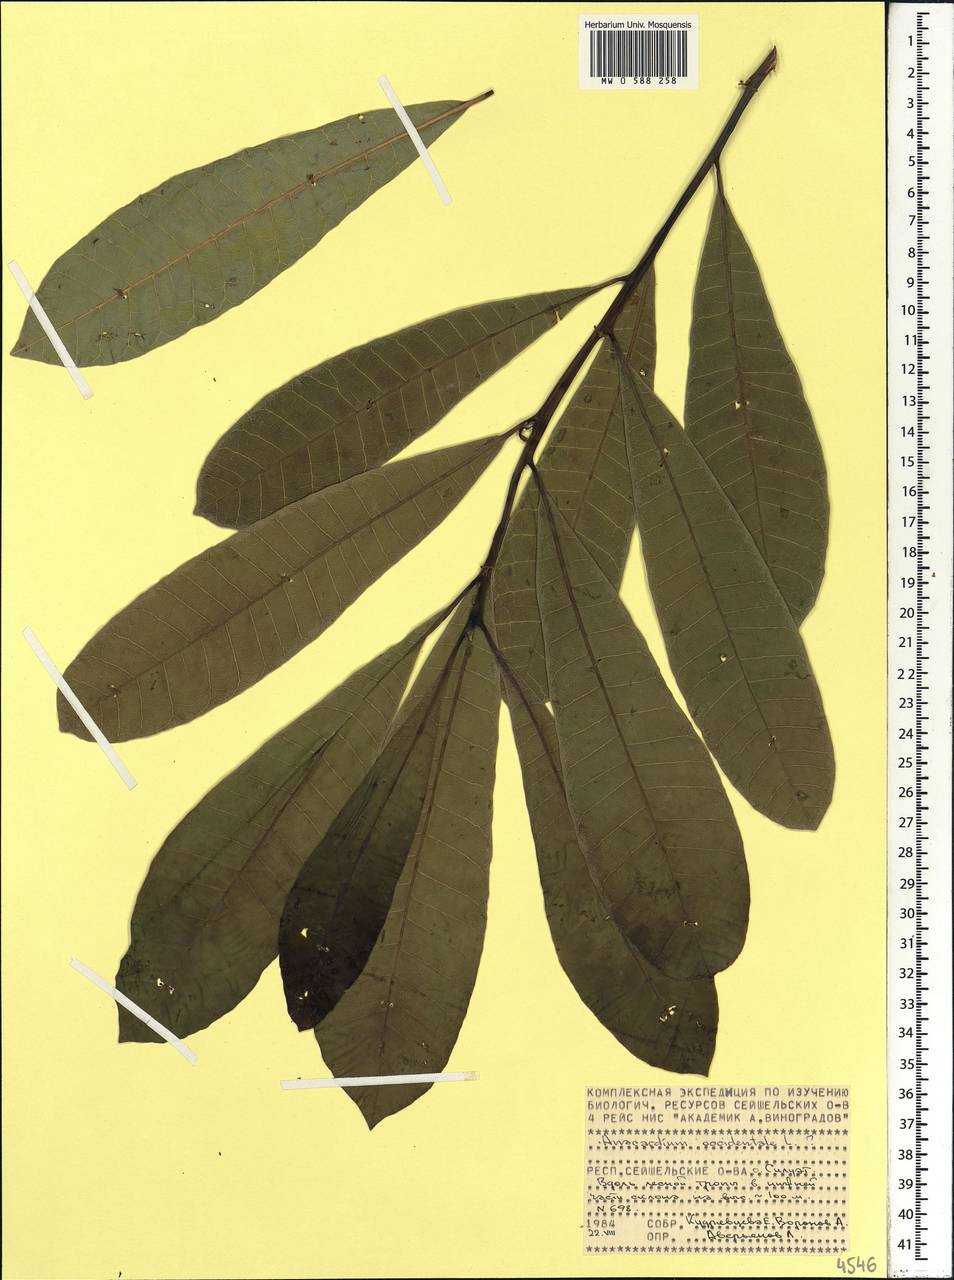 Anacardium occidentale L., Africa (AFR) (Seychelles)